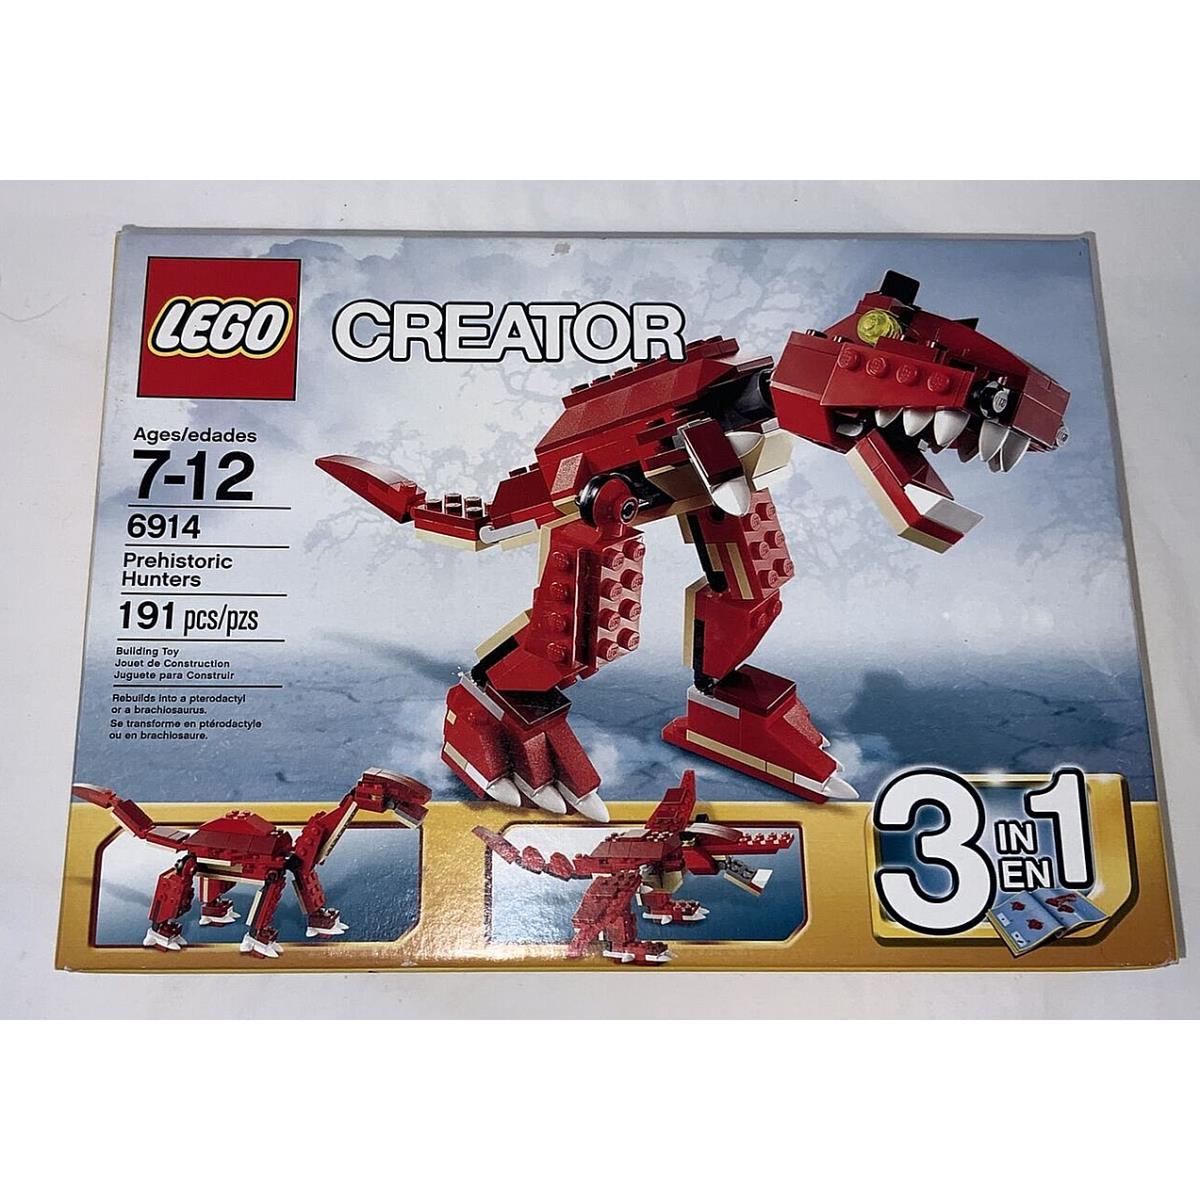 Lego Creator 3in1 6914 Prehistoric Hunters